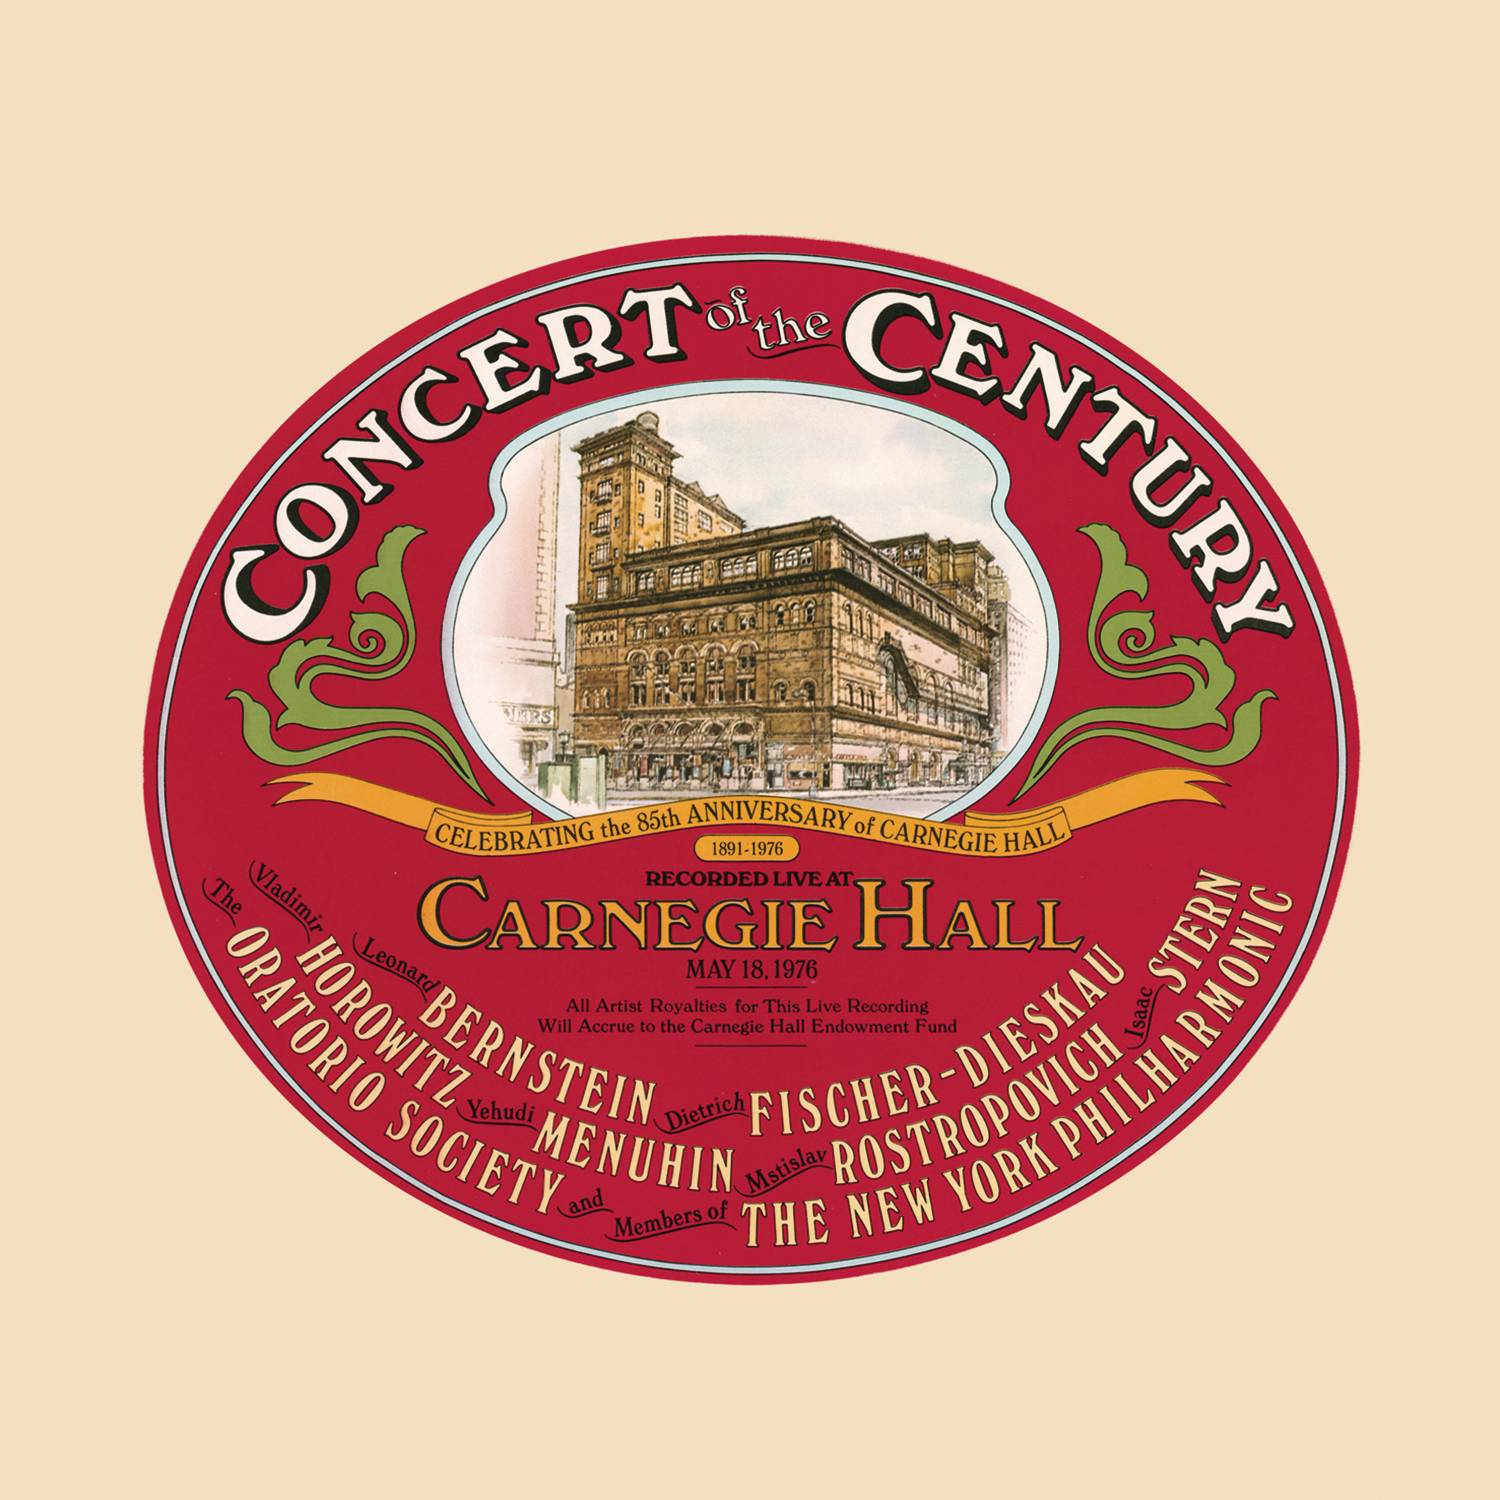 Concert of the Century